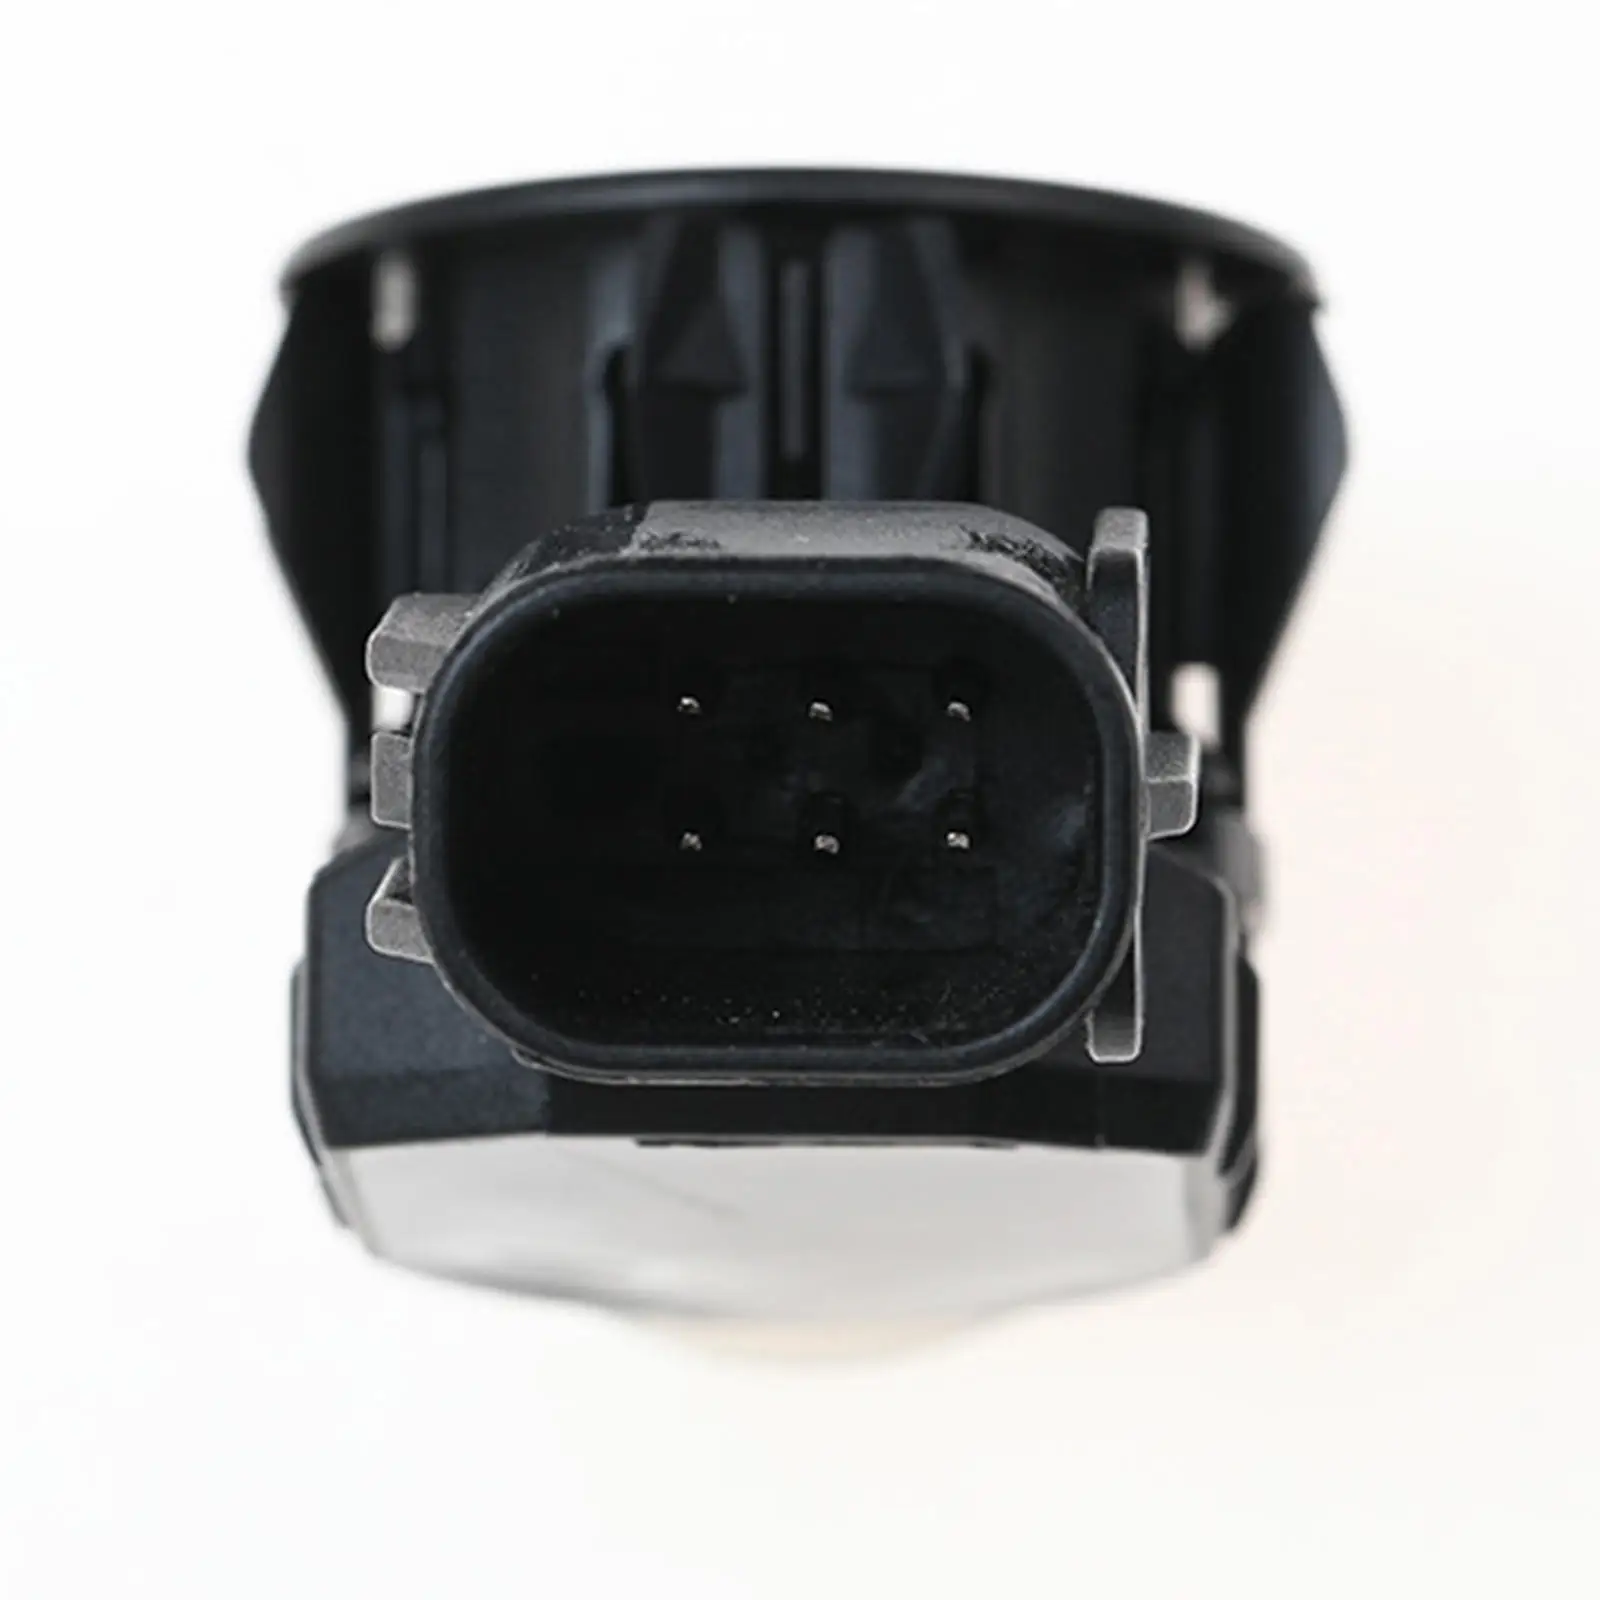 Bumper Parking Assist Sensor Black Reversing Distance Control Sensor for Toyota RAV4 2013-2016 Accessories